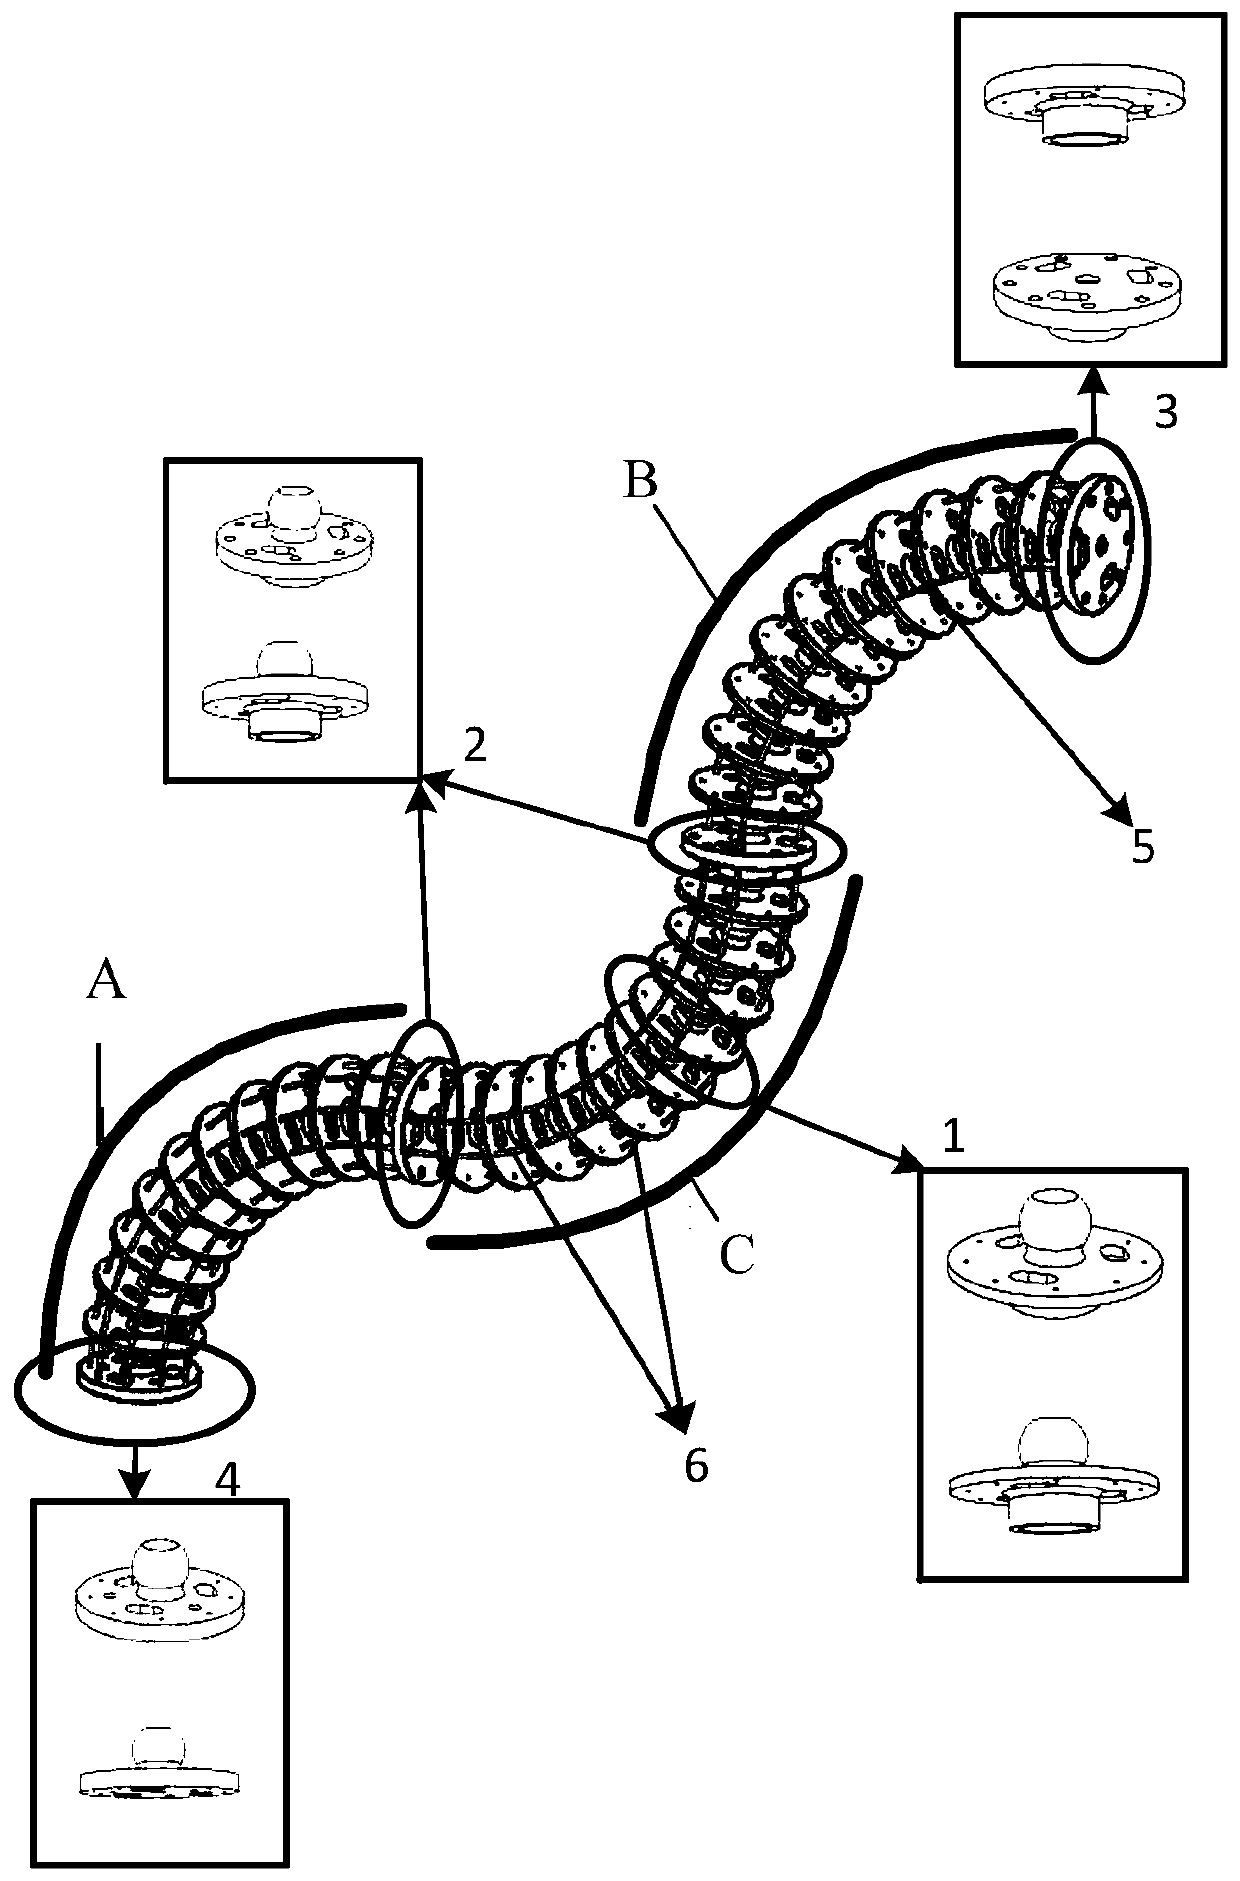 Continuous mechanical arm imitating snake vertebra